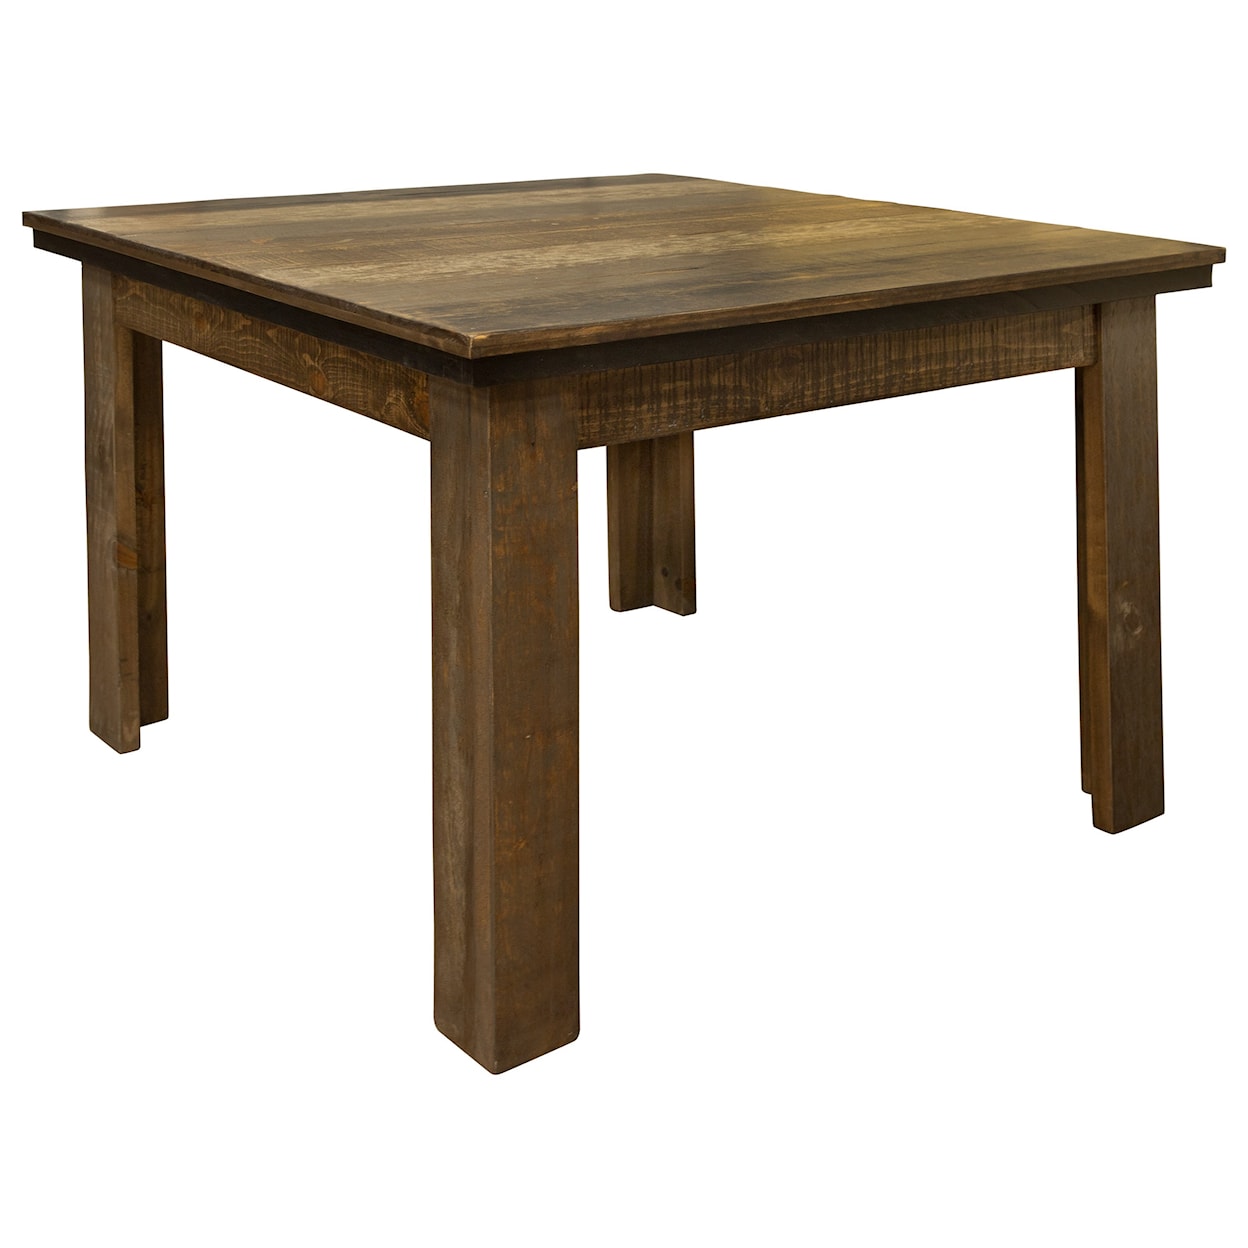 International Furniture Direct Loft Rustic Dining Table